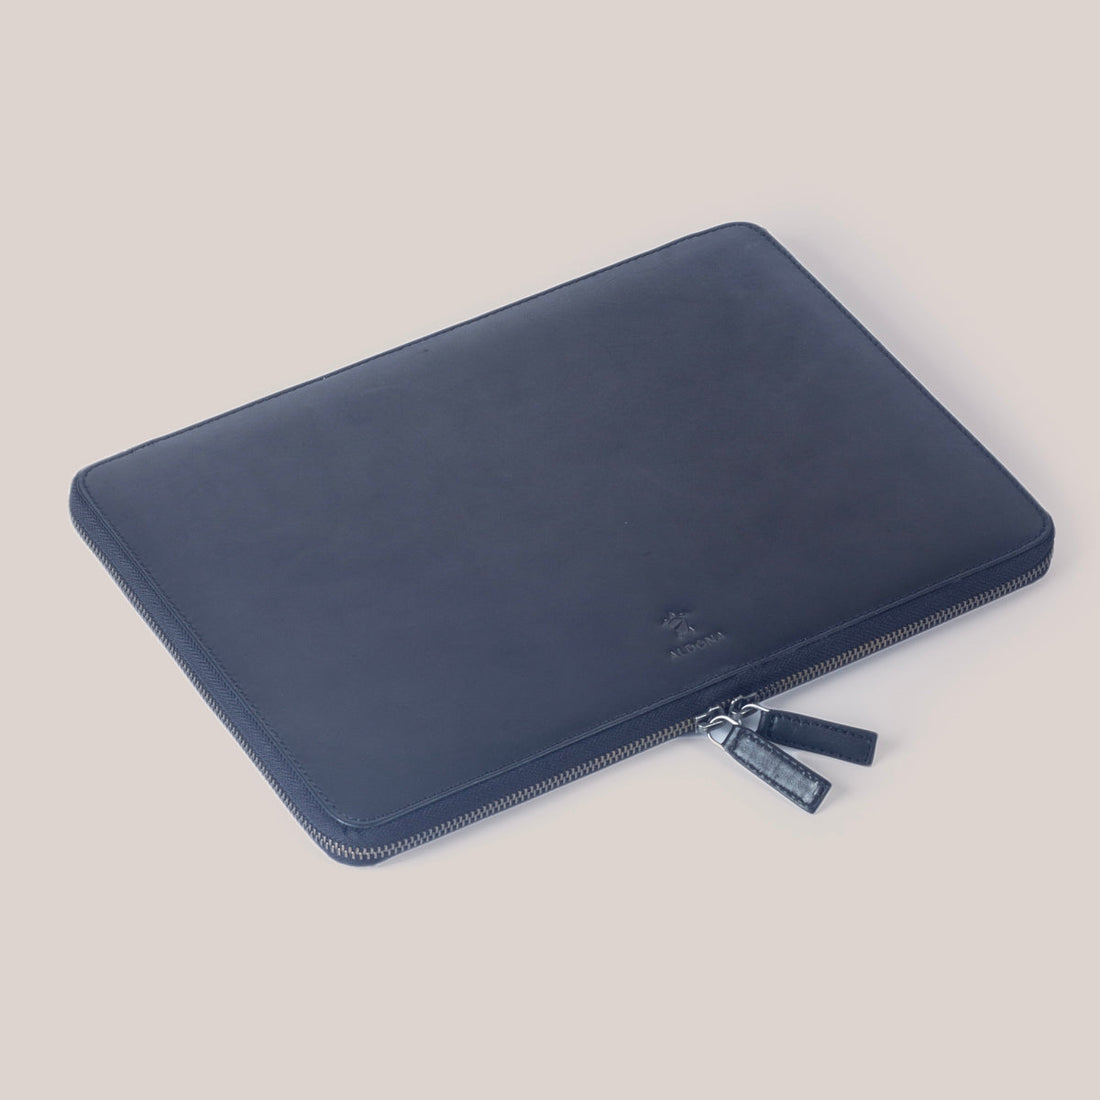 DELL XPS 13 Plus Zippered Laptop Case - Felt and Tan Crunch